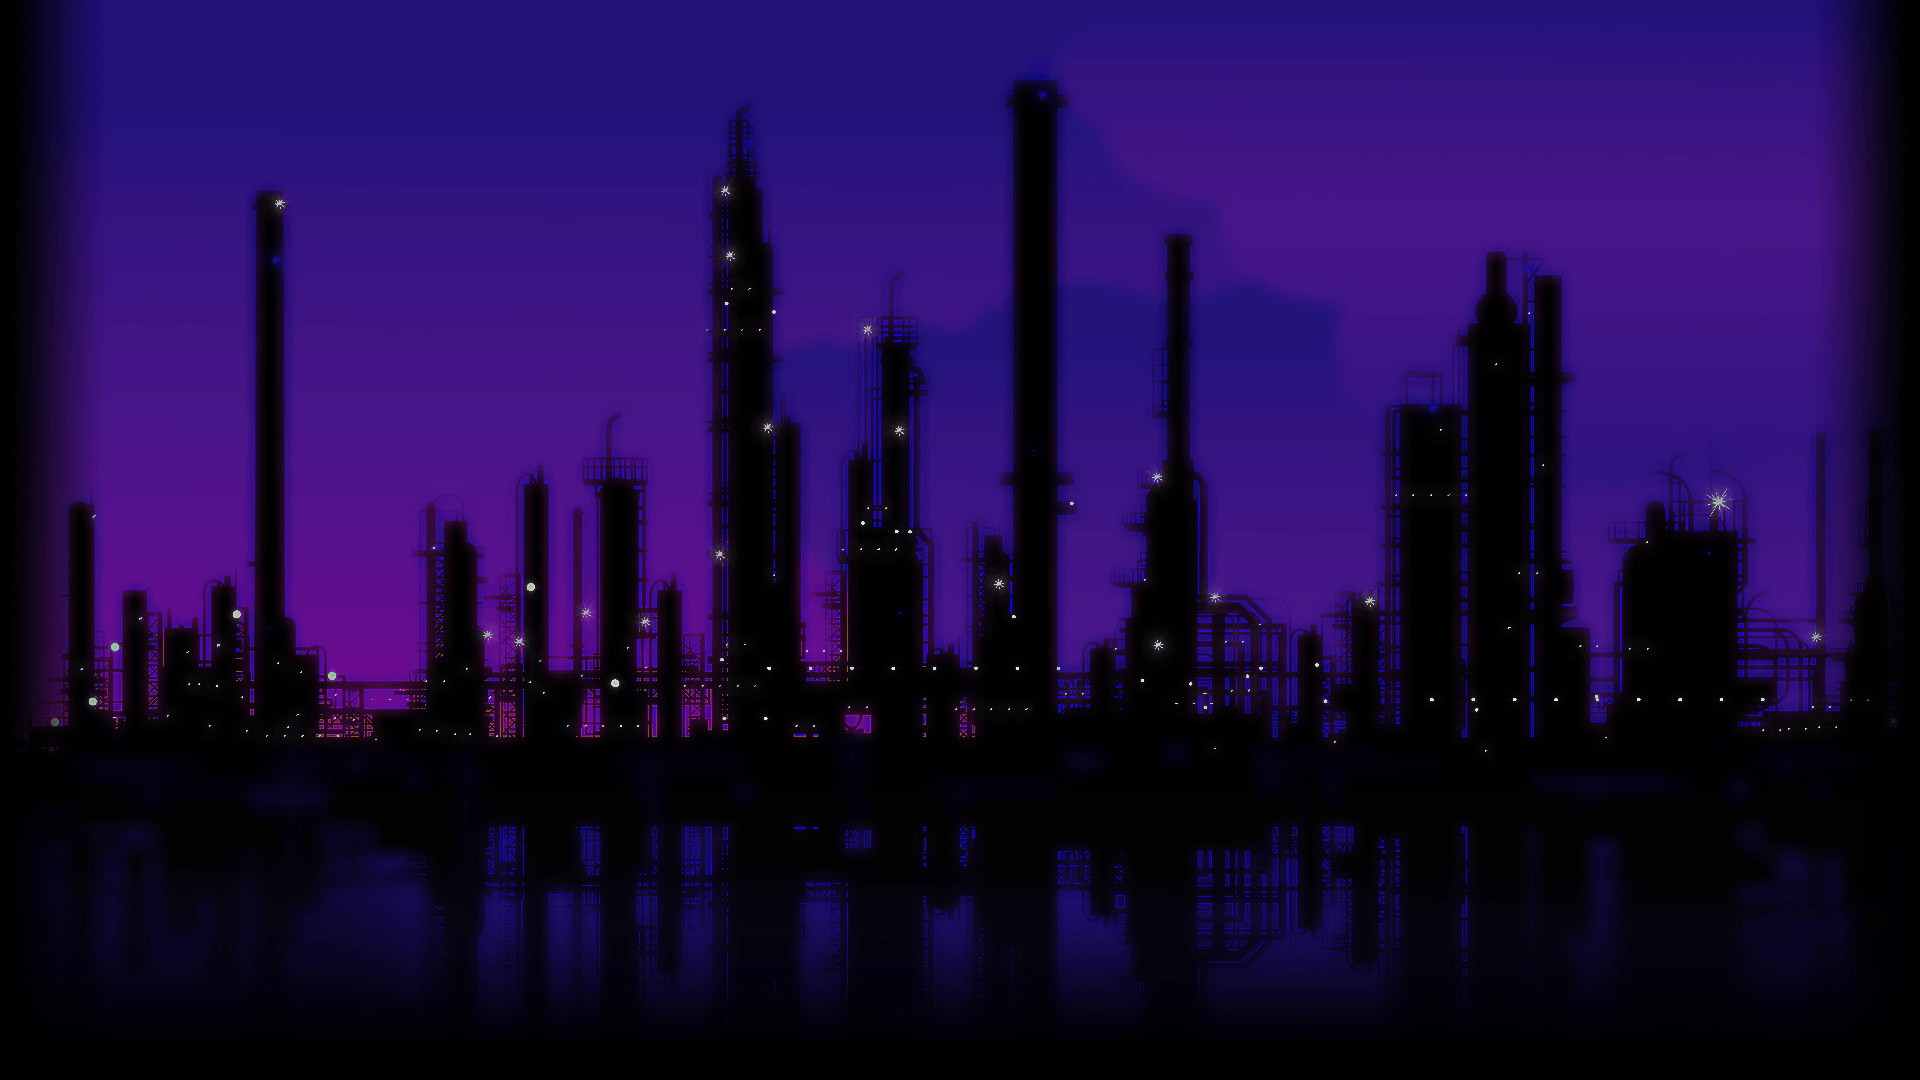 A purple sky with buildings in the background - Purple, dark purple